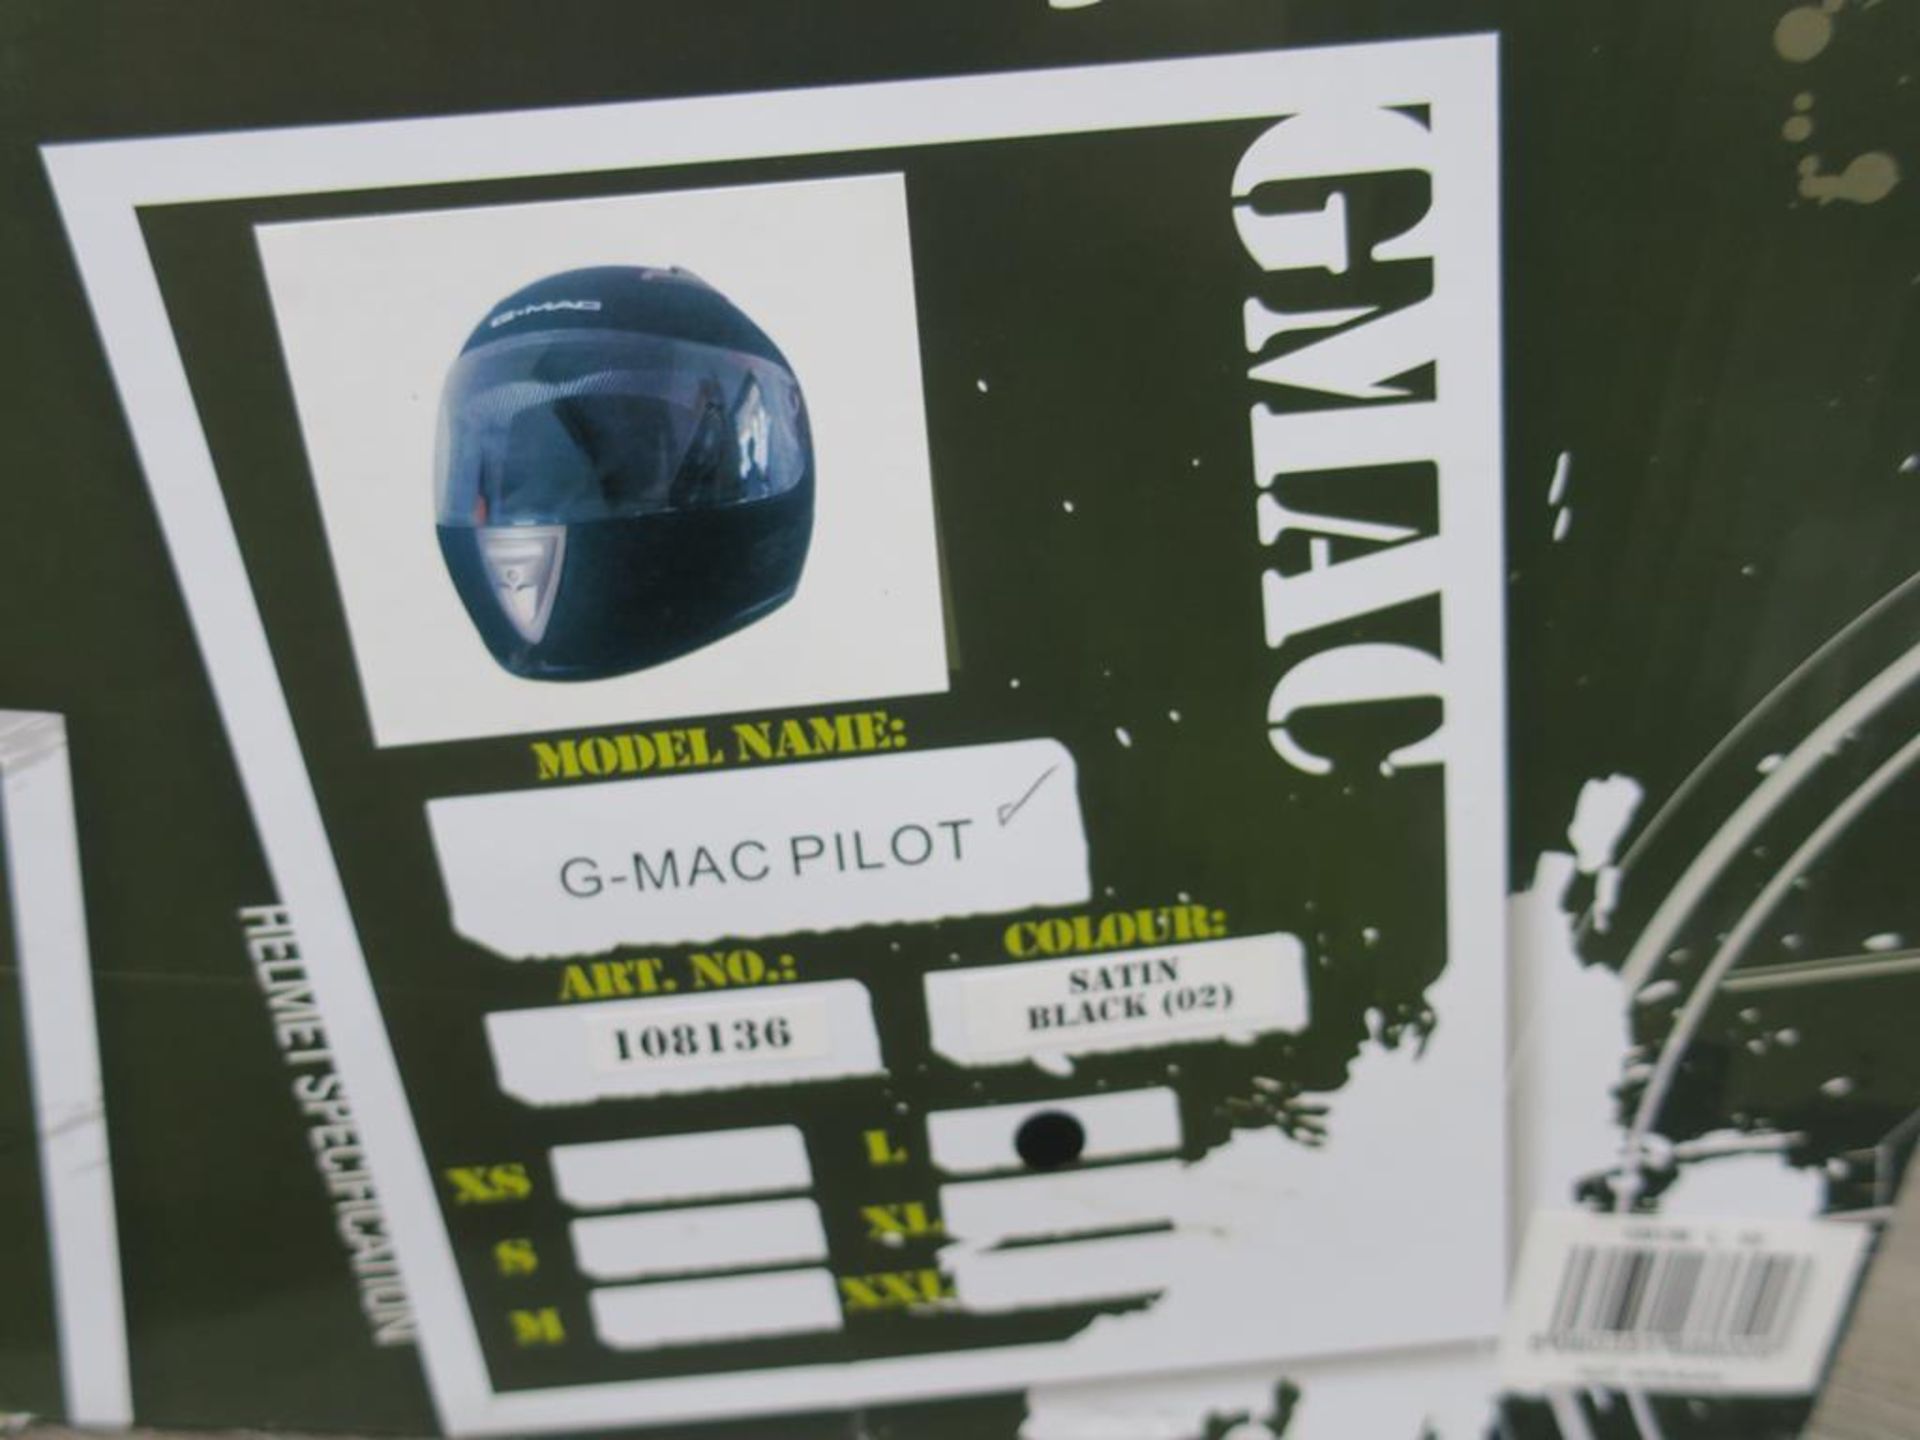 * A G-Mac Pilot Satin Black 108136 Helmet size L (RRP £36.99)